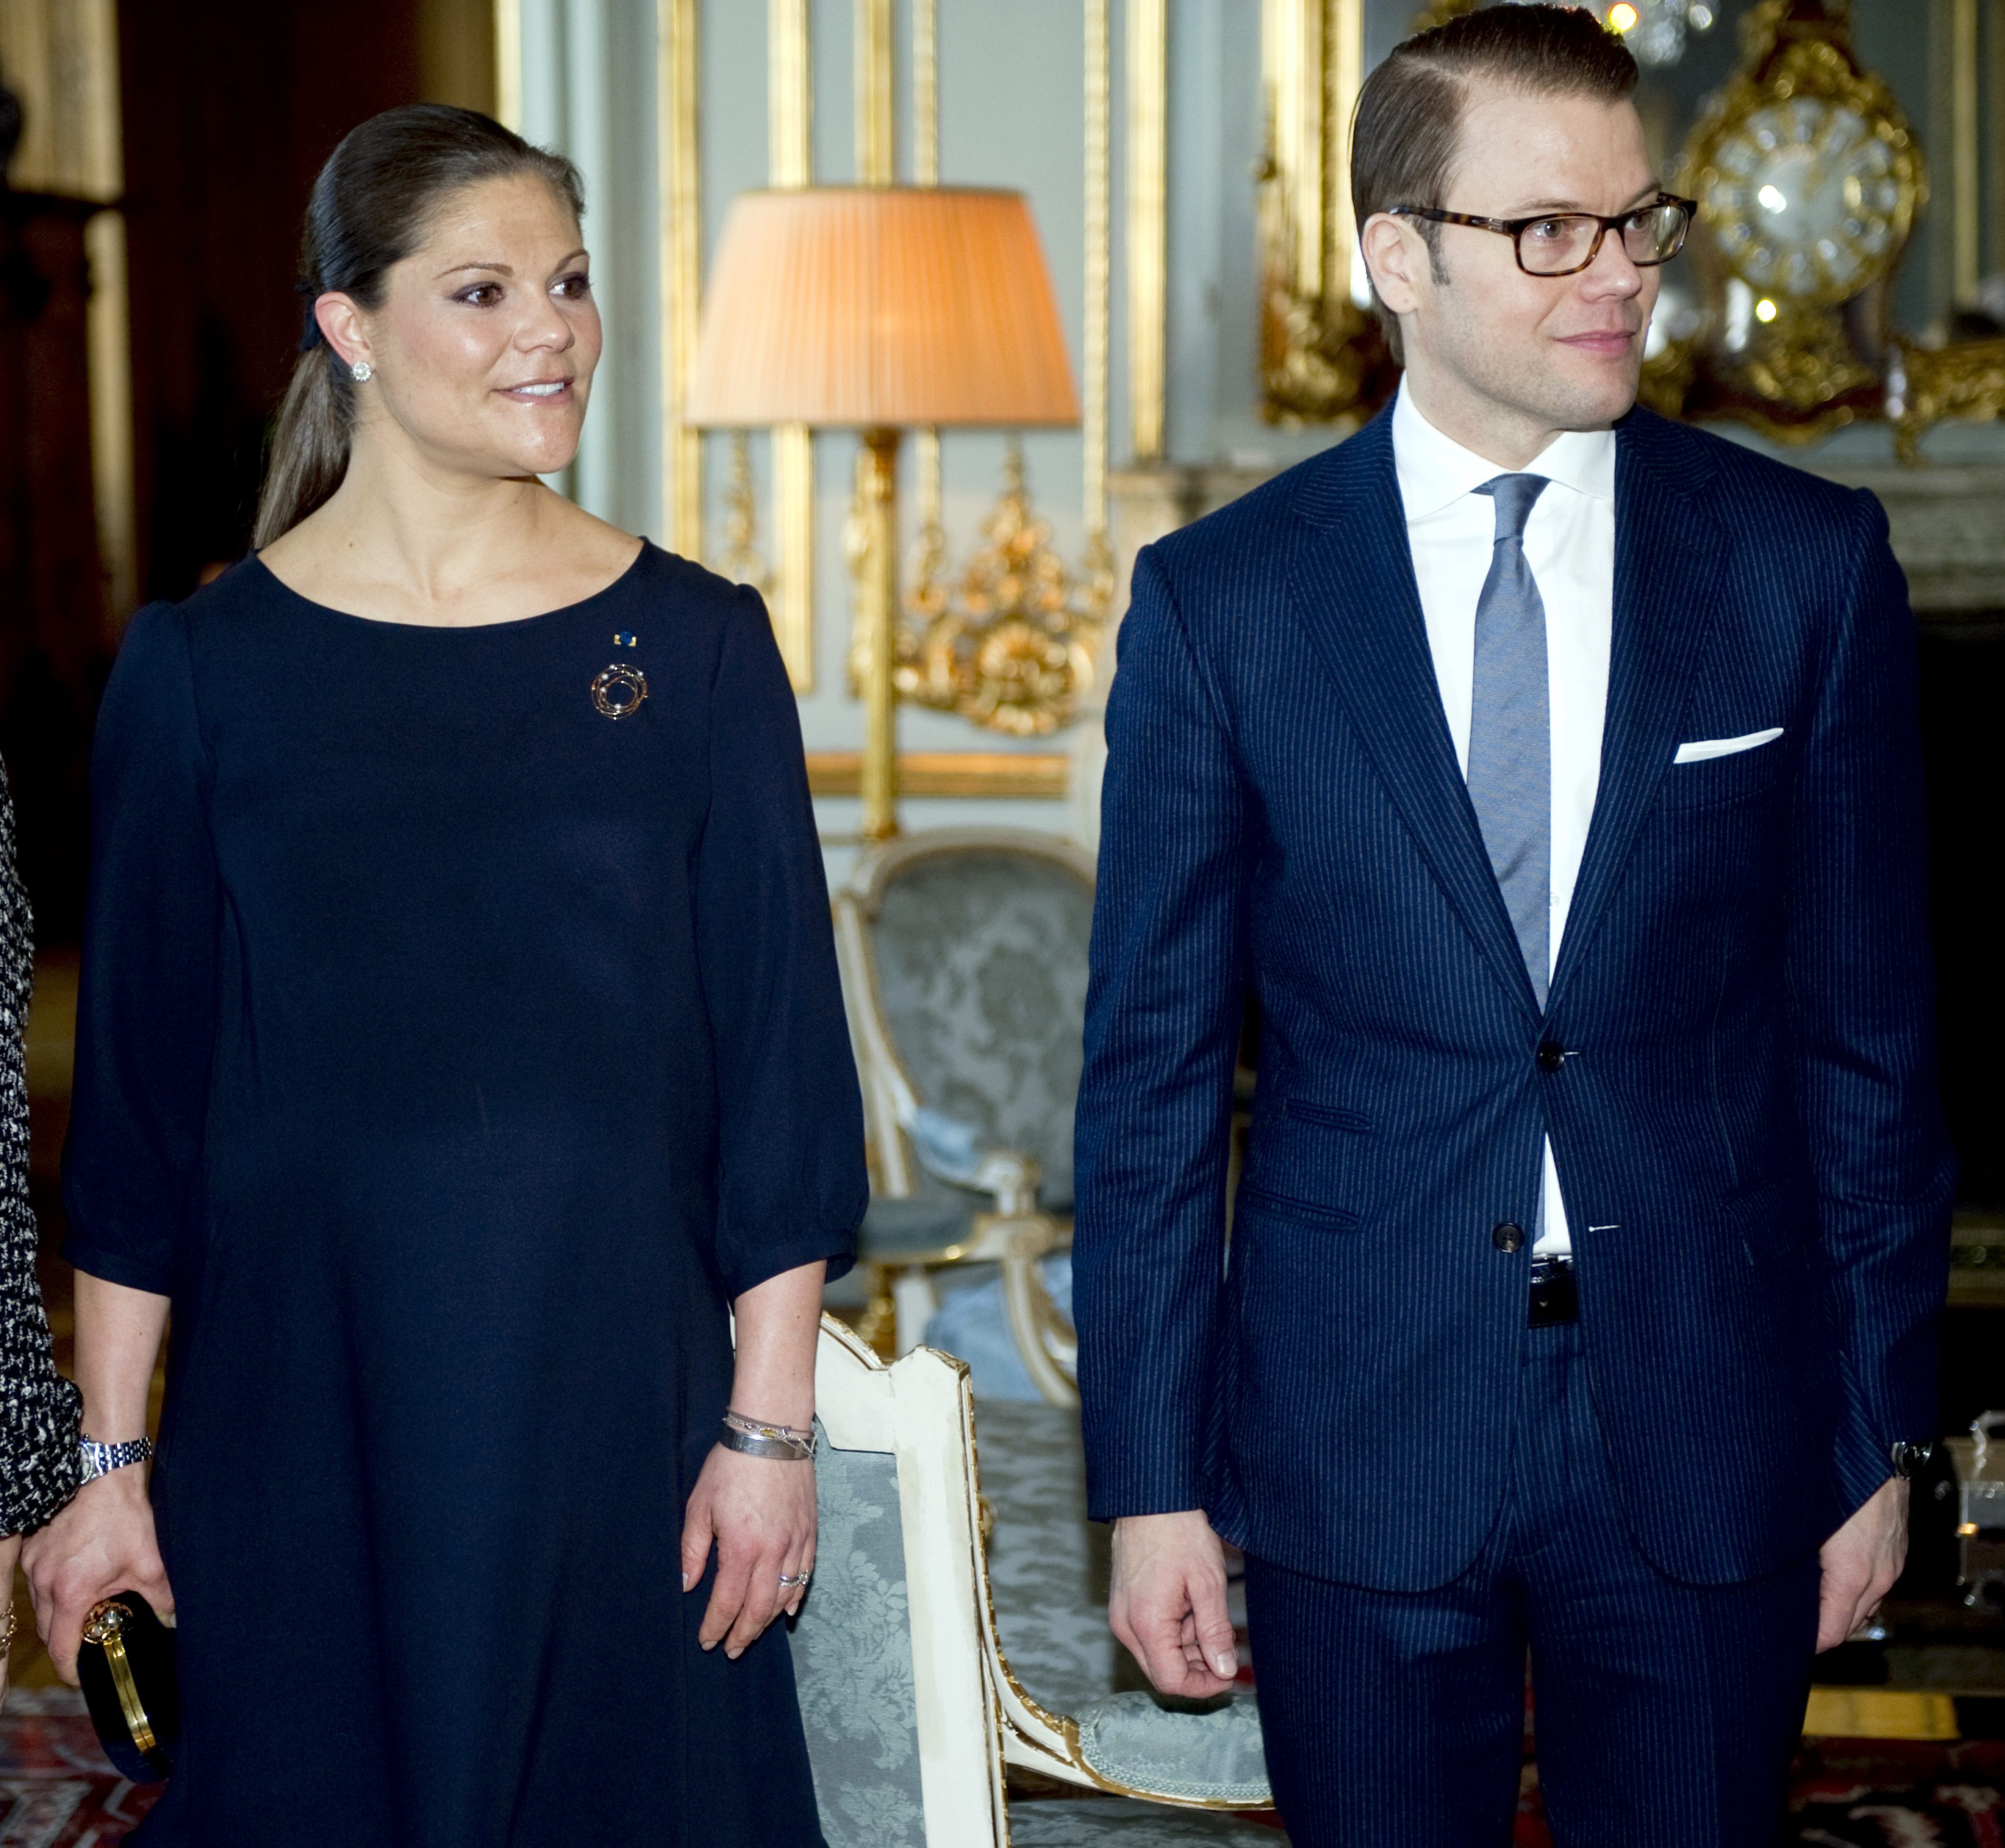 Kung Carl XVI Gustaf, Prins Daniel, Kungligt, apanage, Hovet, kronprinsessan Victoria